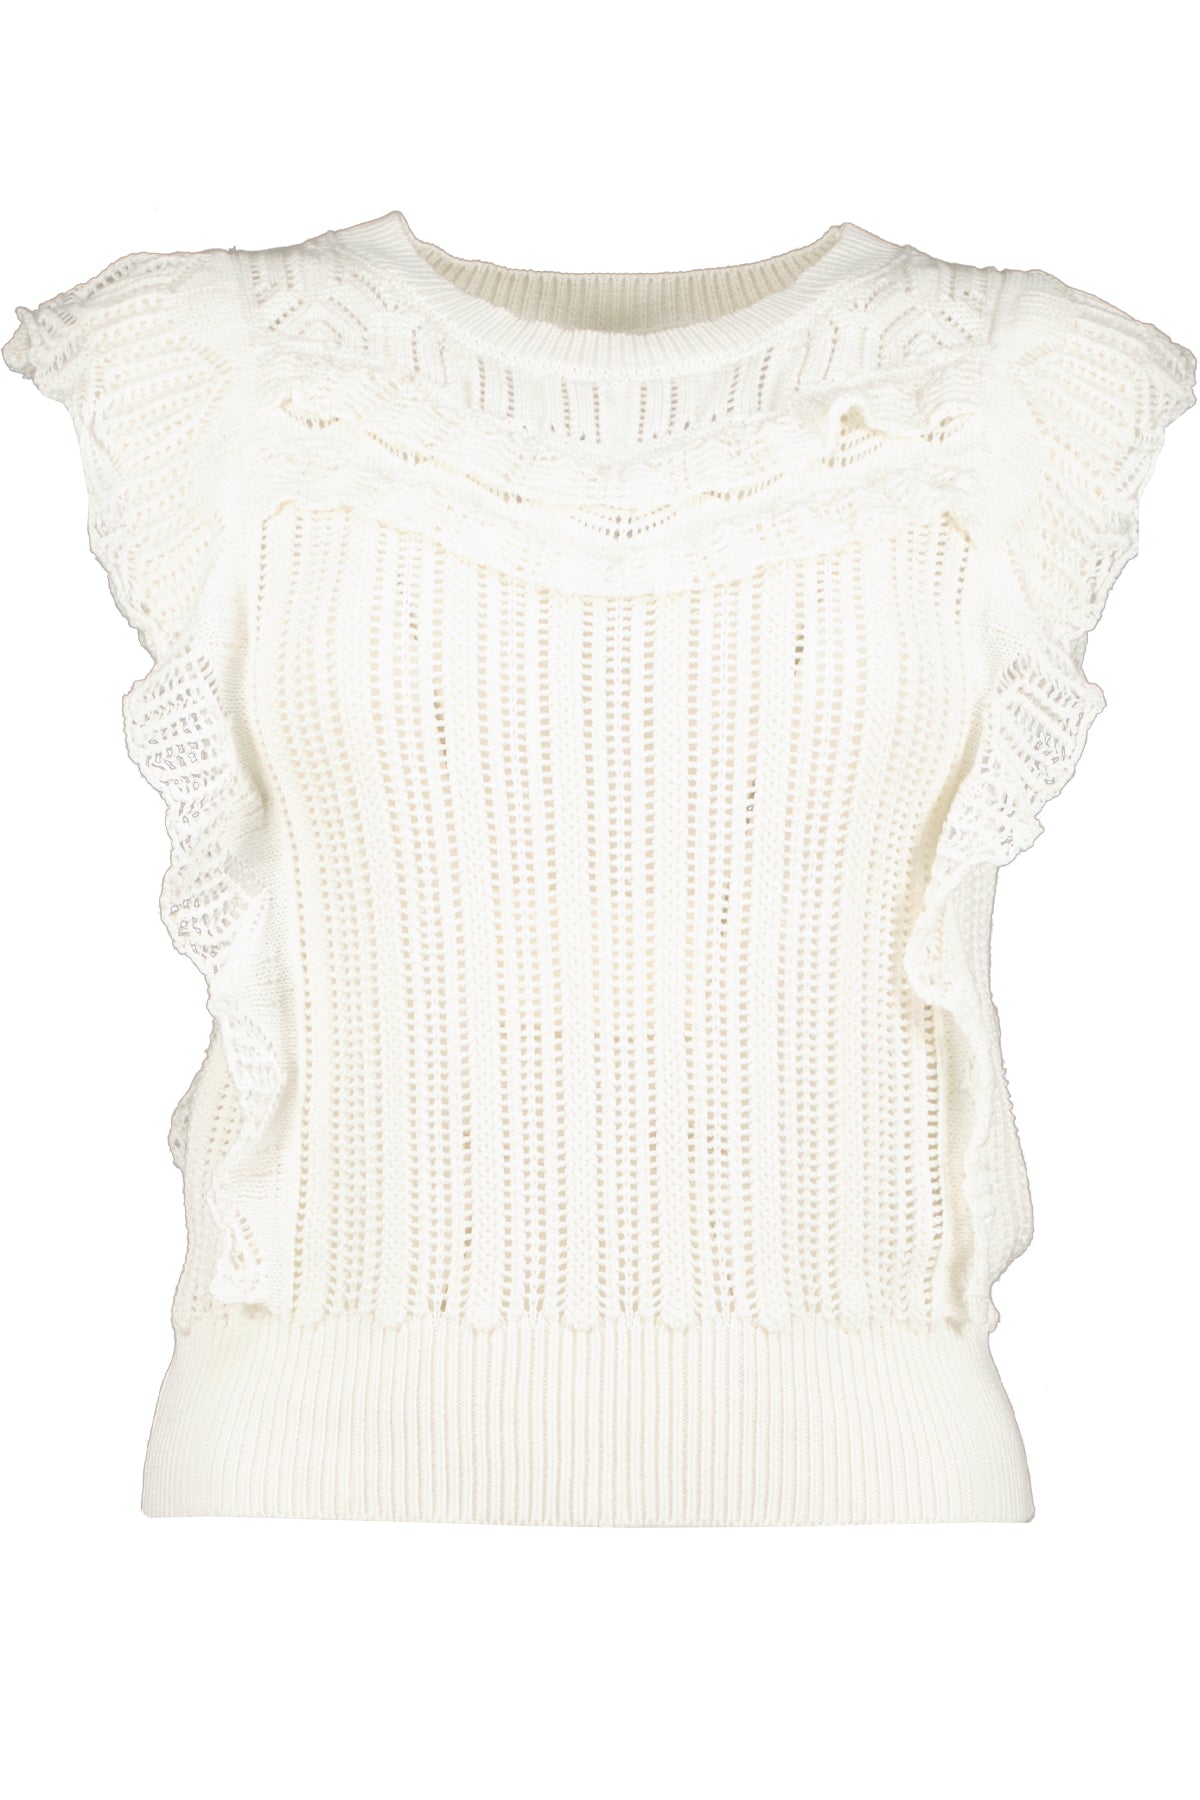 white crochet top with ruffles